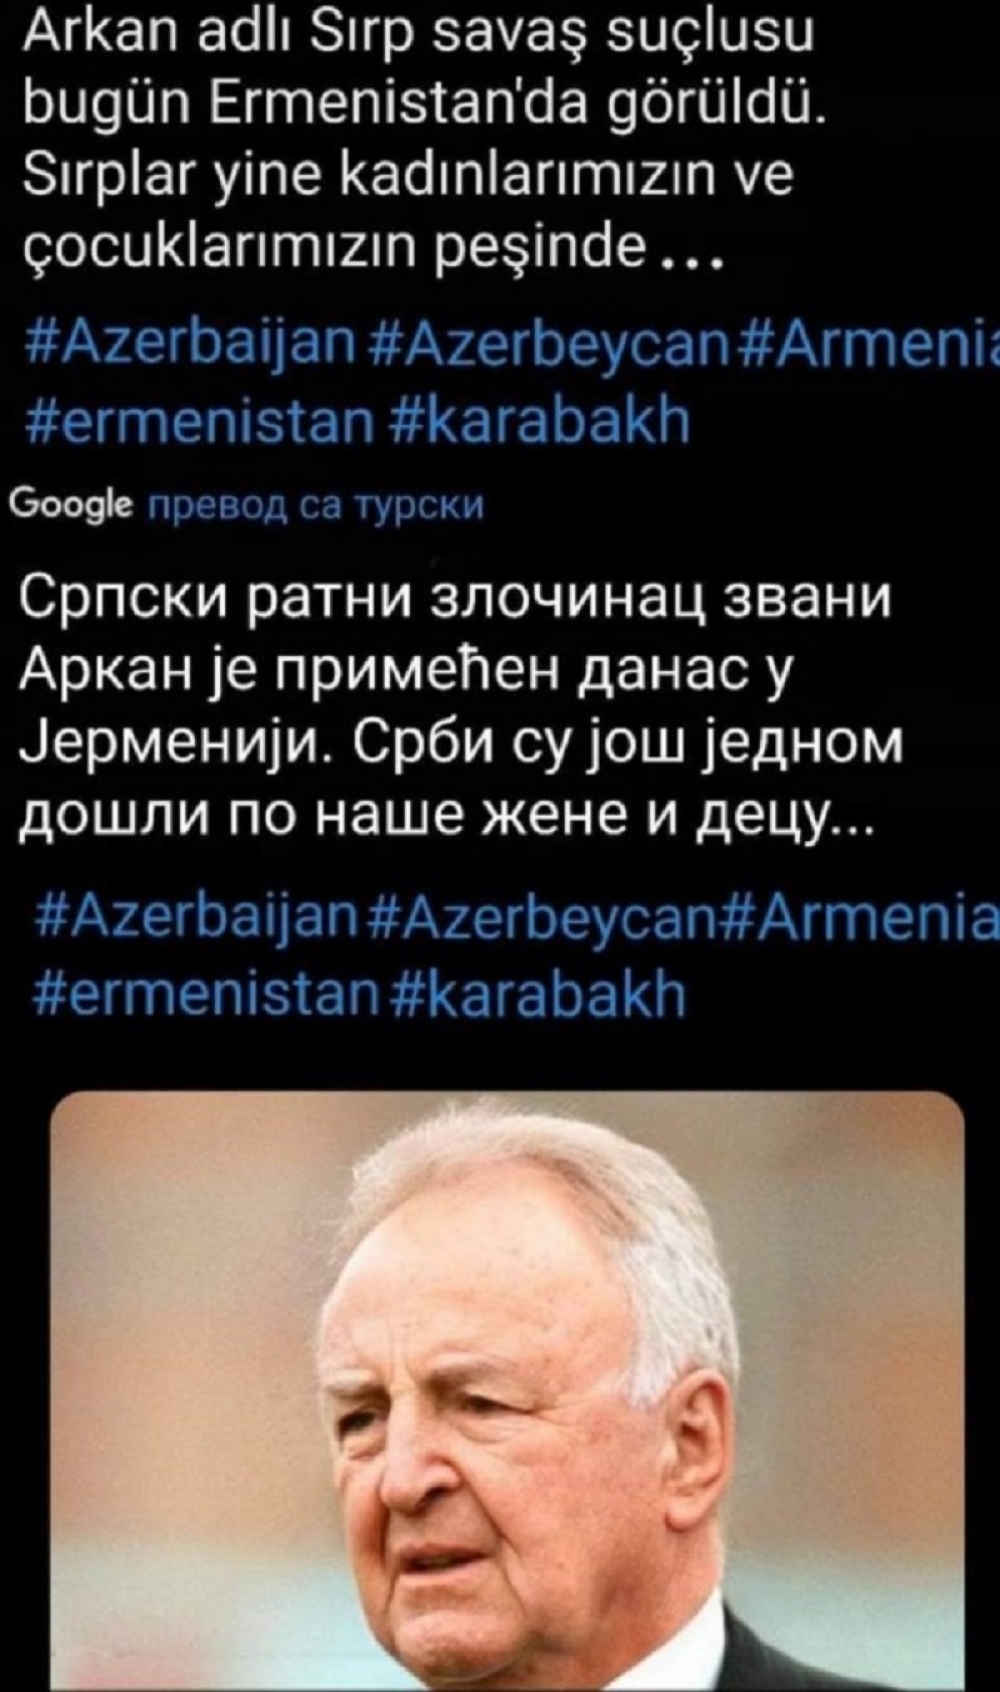 Arkani gjall lufton per Armenin kundra azerbegjanit IMG_20201004_201252-605x1024_1000x0